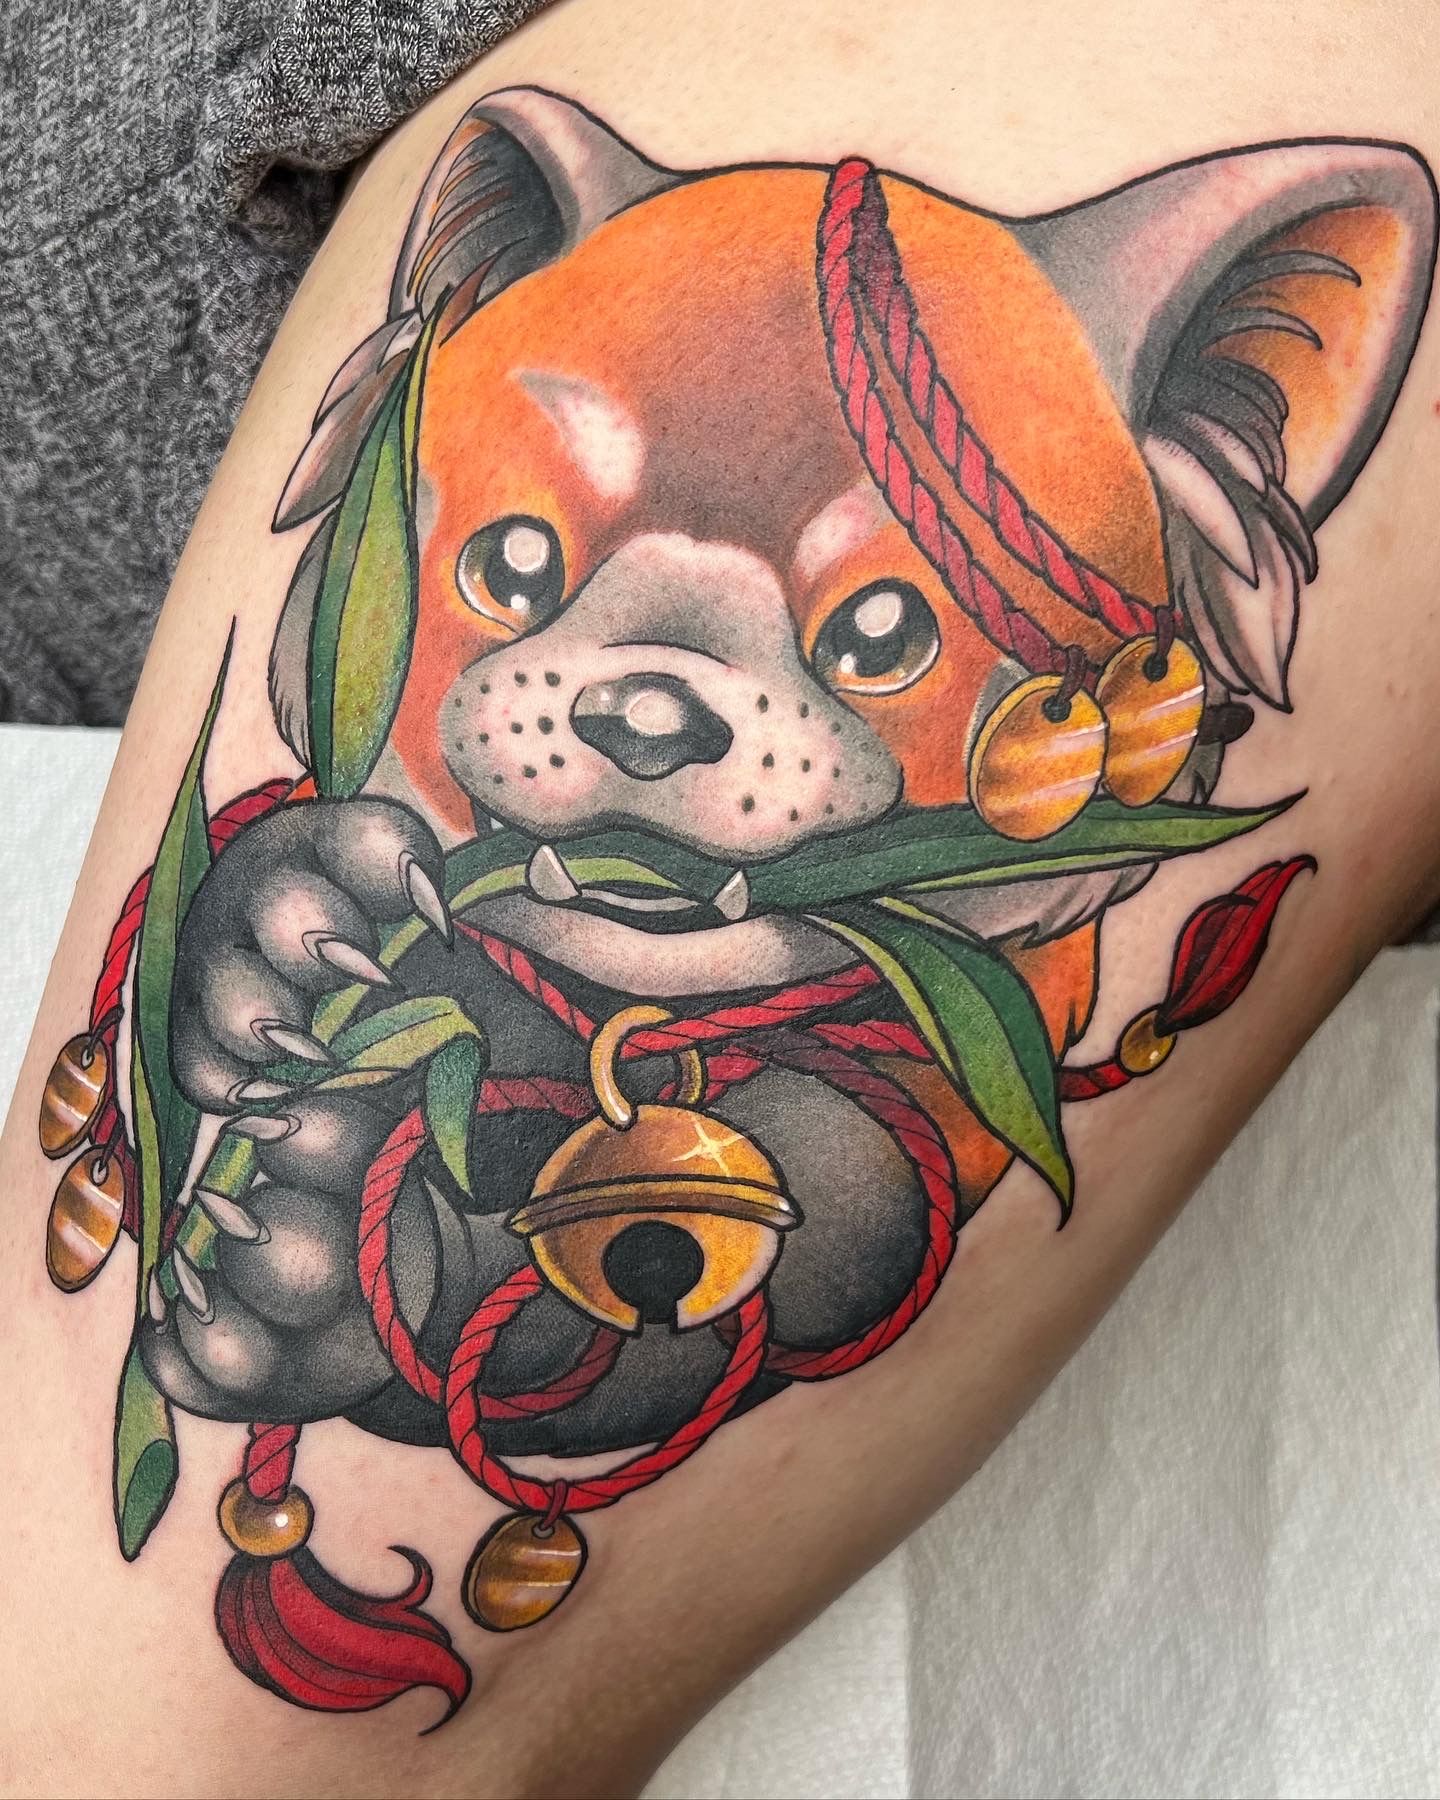 Sachin Tattooist on Instagram Cute panda Tattoo  panda tattoo  pandas tattoos cute freedom hope smalltattoo pandatattoo girls  animals pandabear